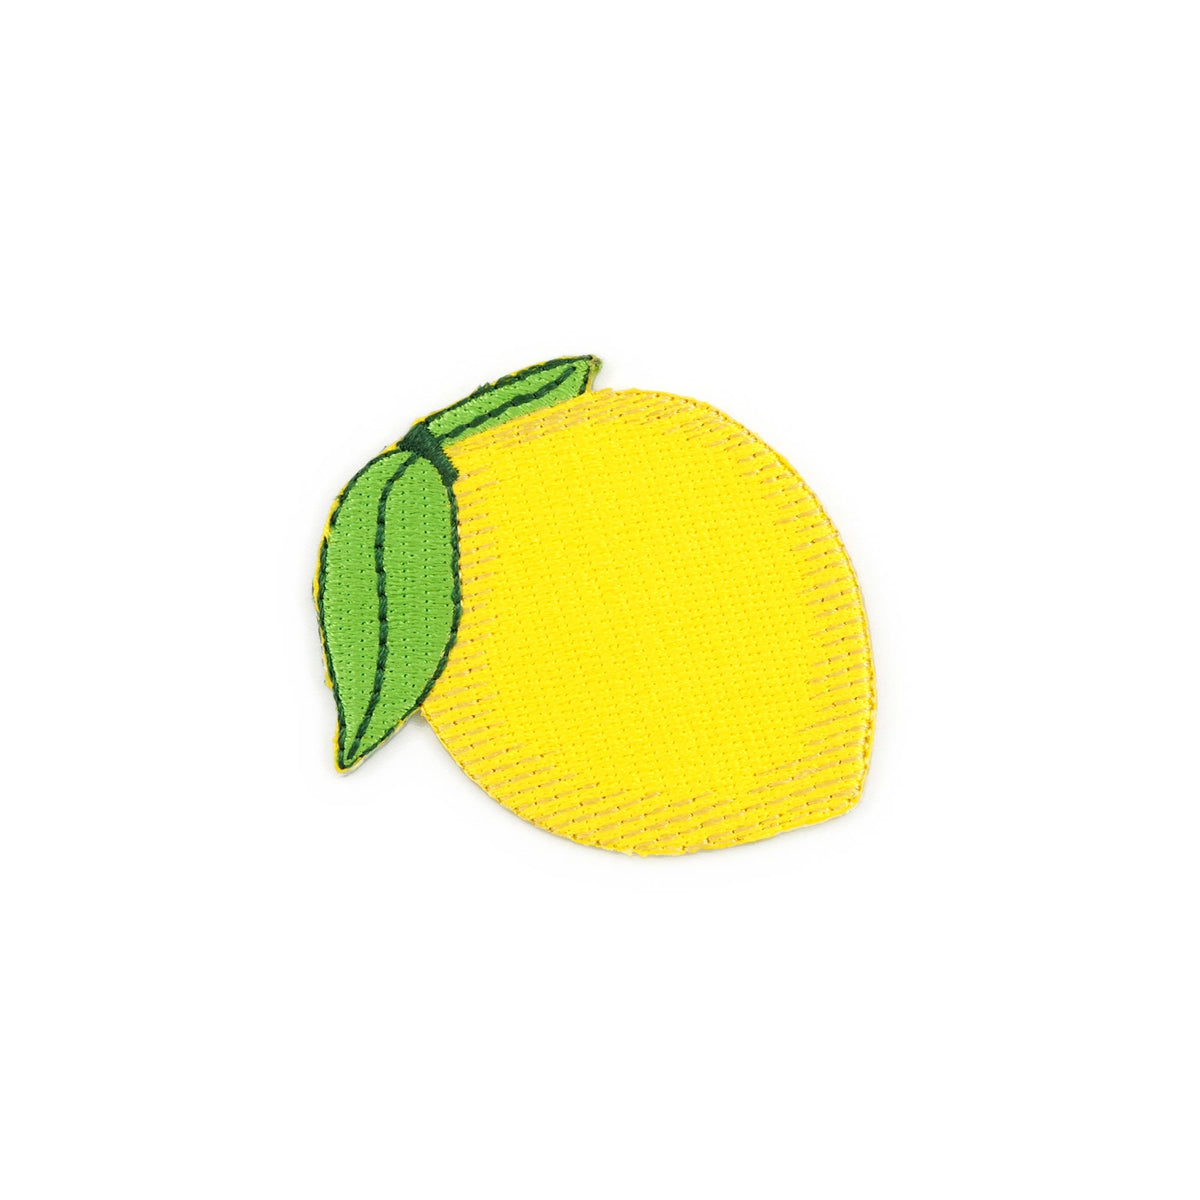 Lemon Emoji embroidered iron-on patch